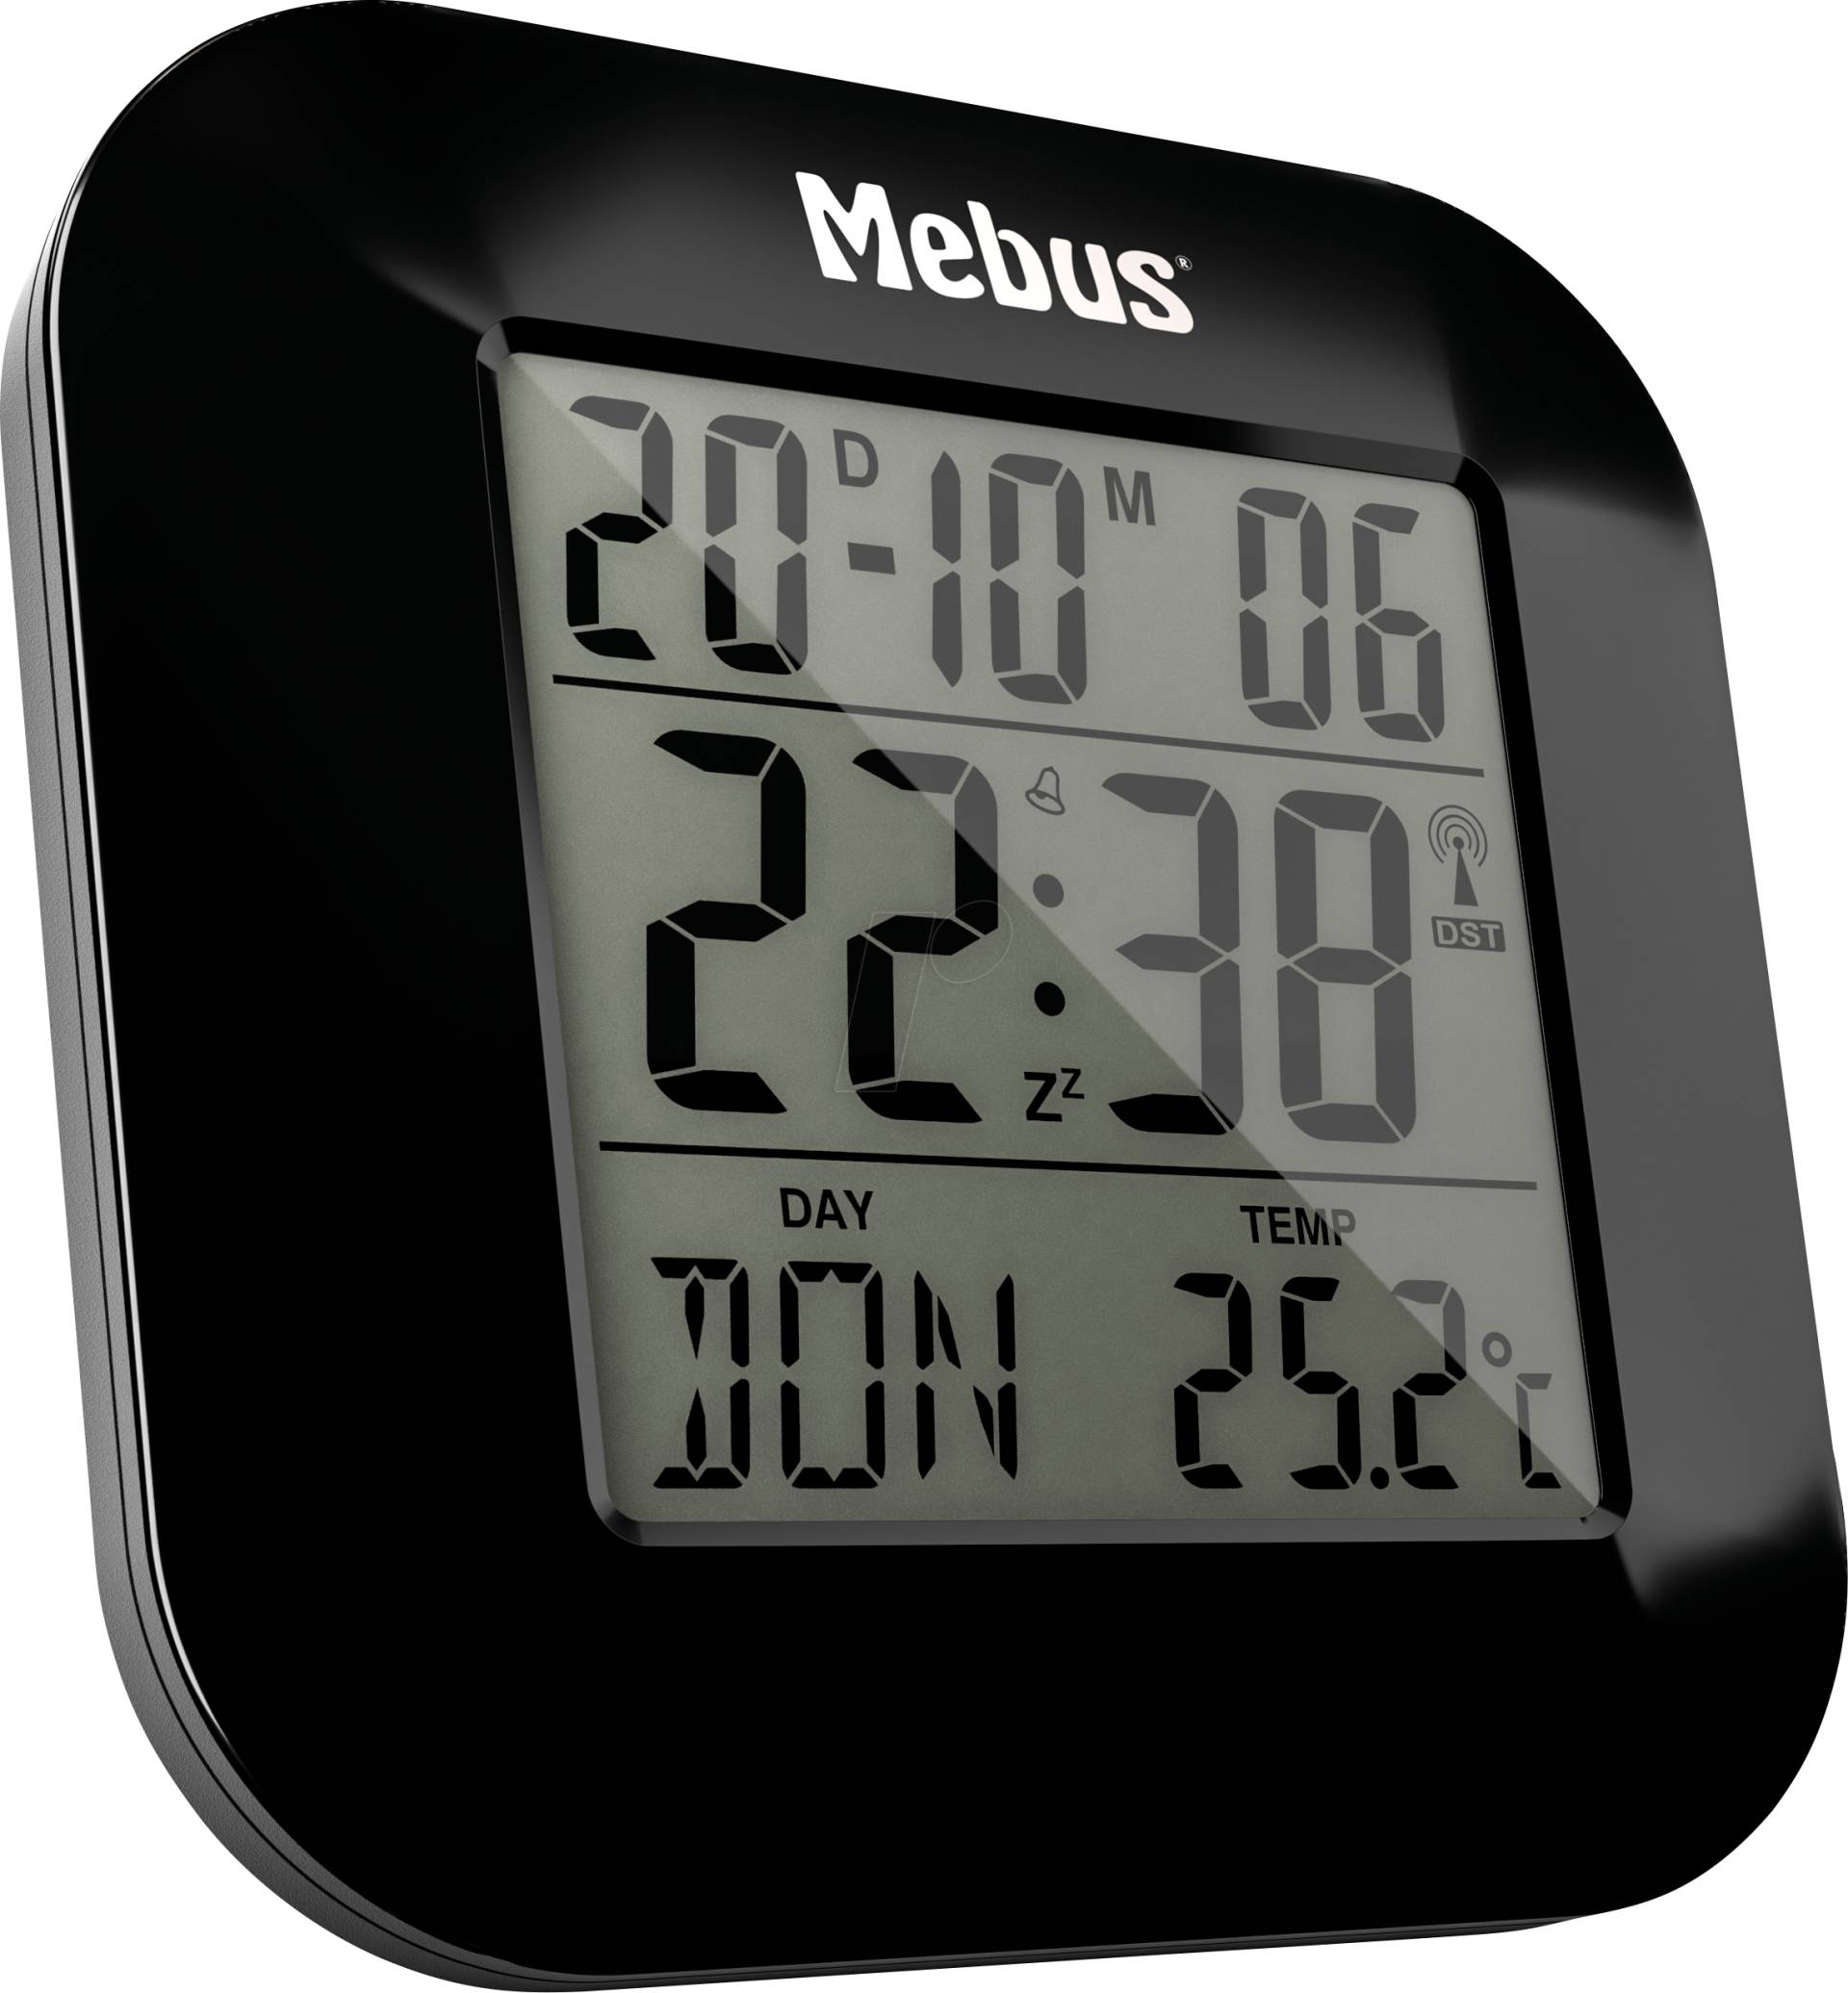 MEBUS 51510 - Funkwecker digital, Temperatur, Datum, schwarz von MEBUS